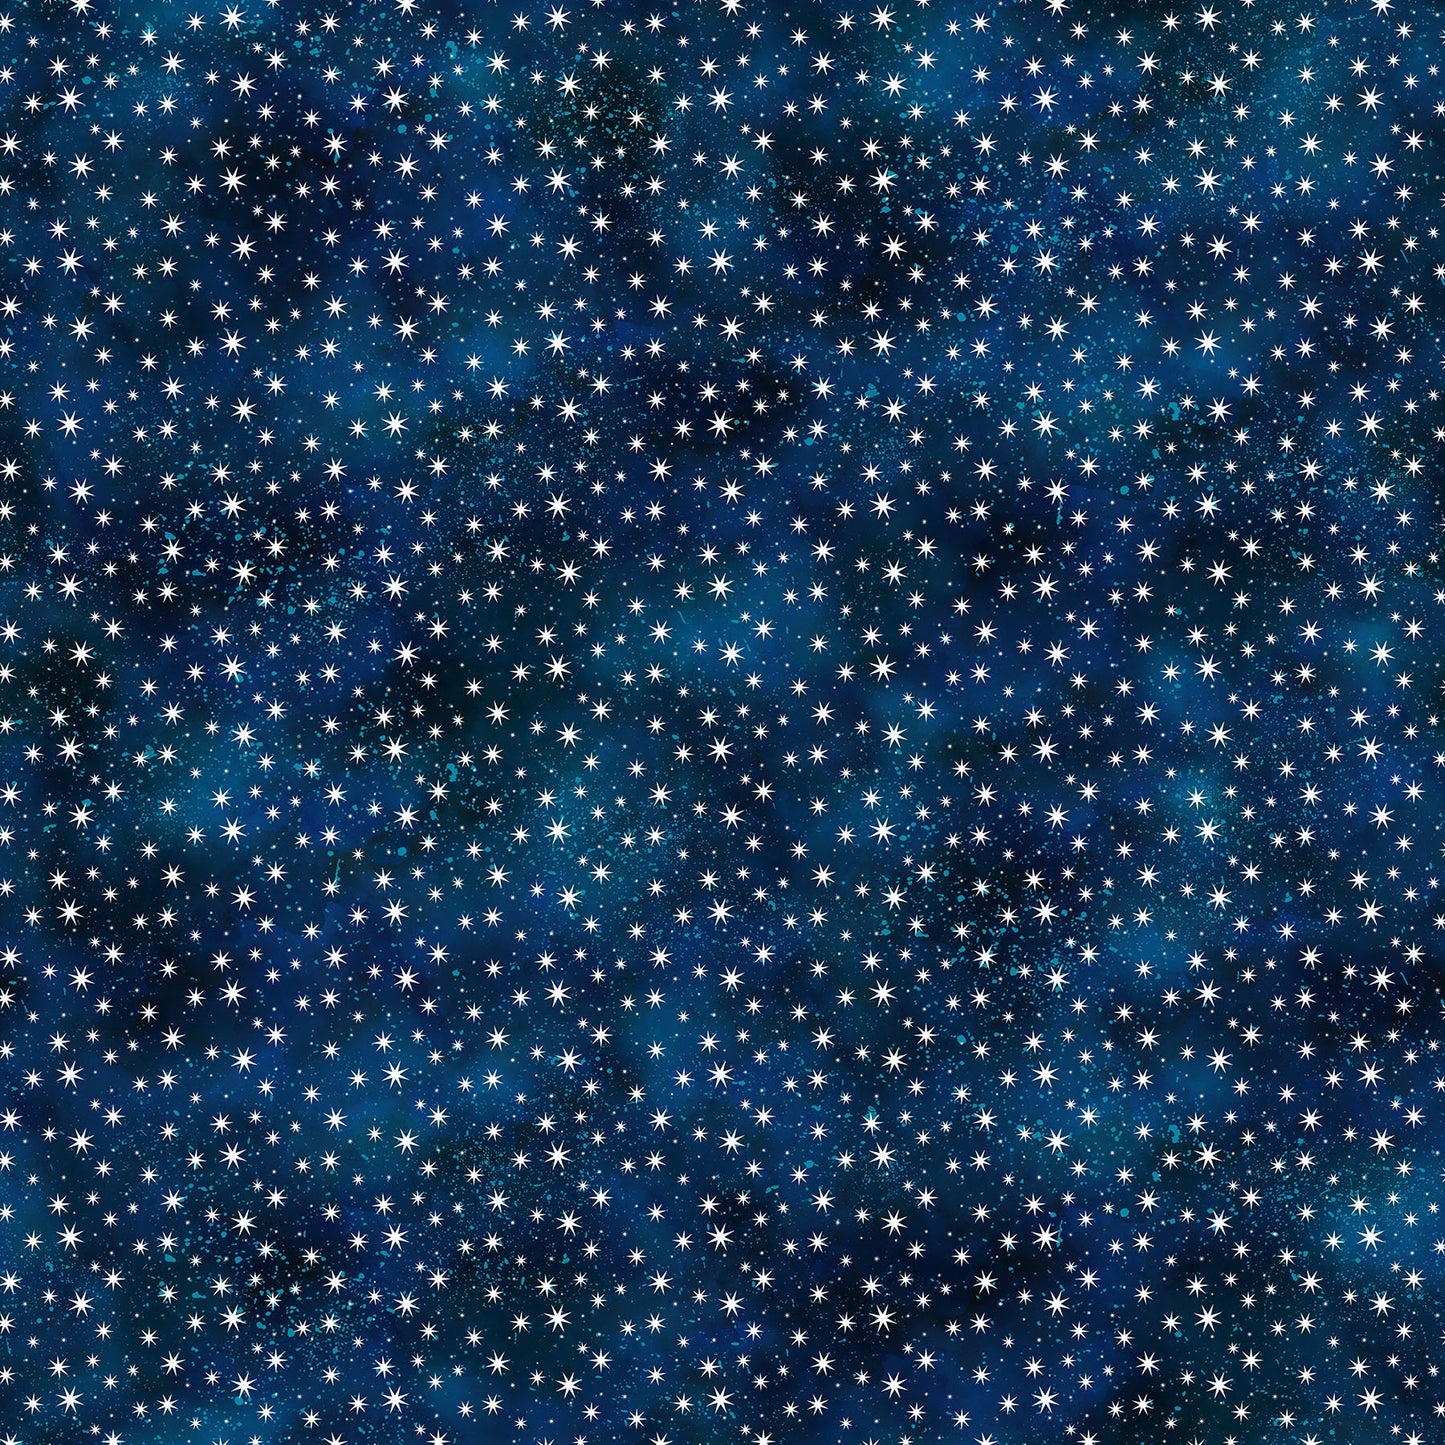 Cosmic Universe DP22720-48 Digitally Printed Cotton Woven Fabric